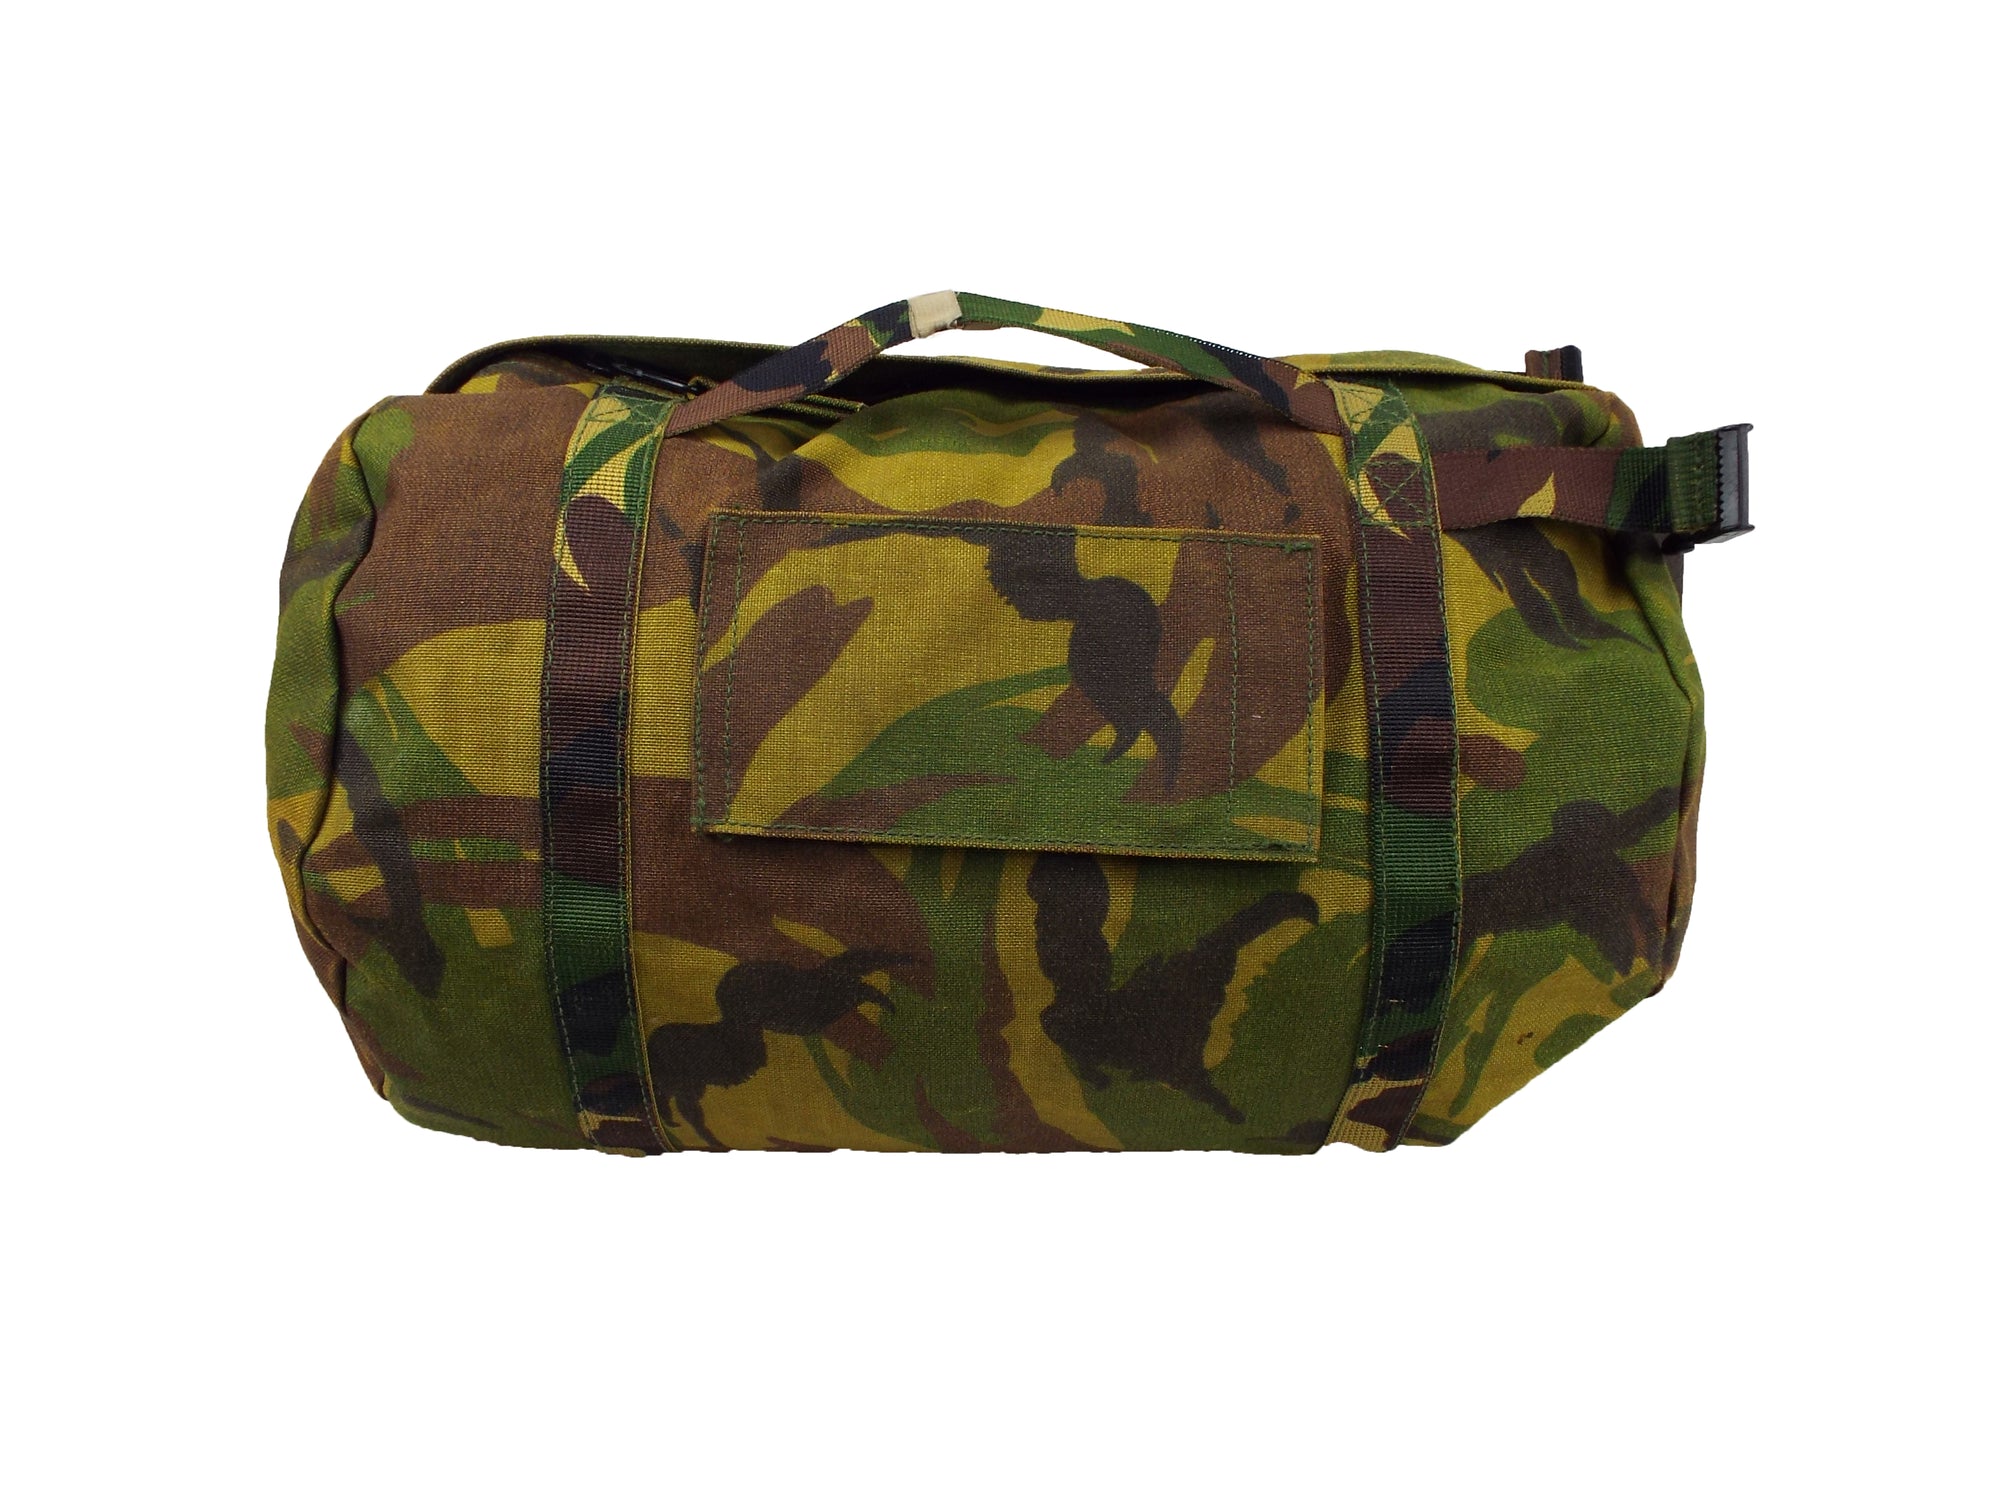 Dutch Army - 10 litre Water Resistant Carry/Stuff Bag - NBC - Grade 1